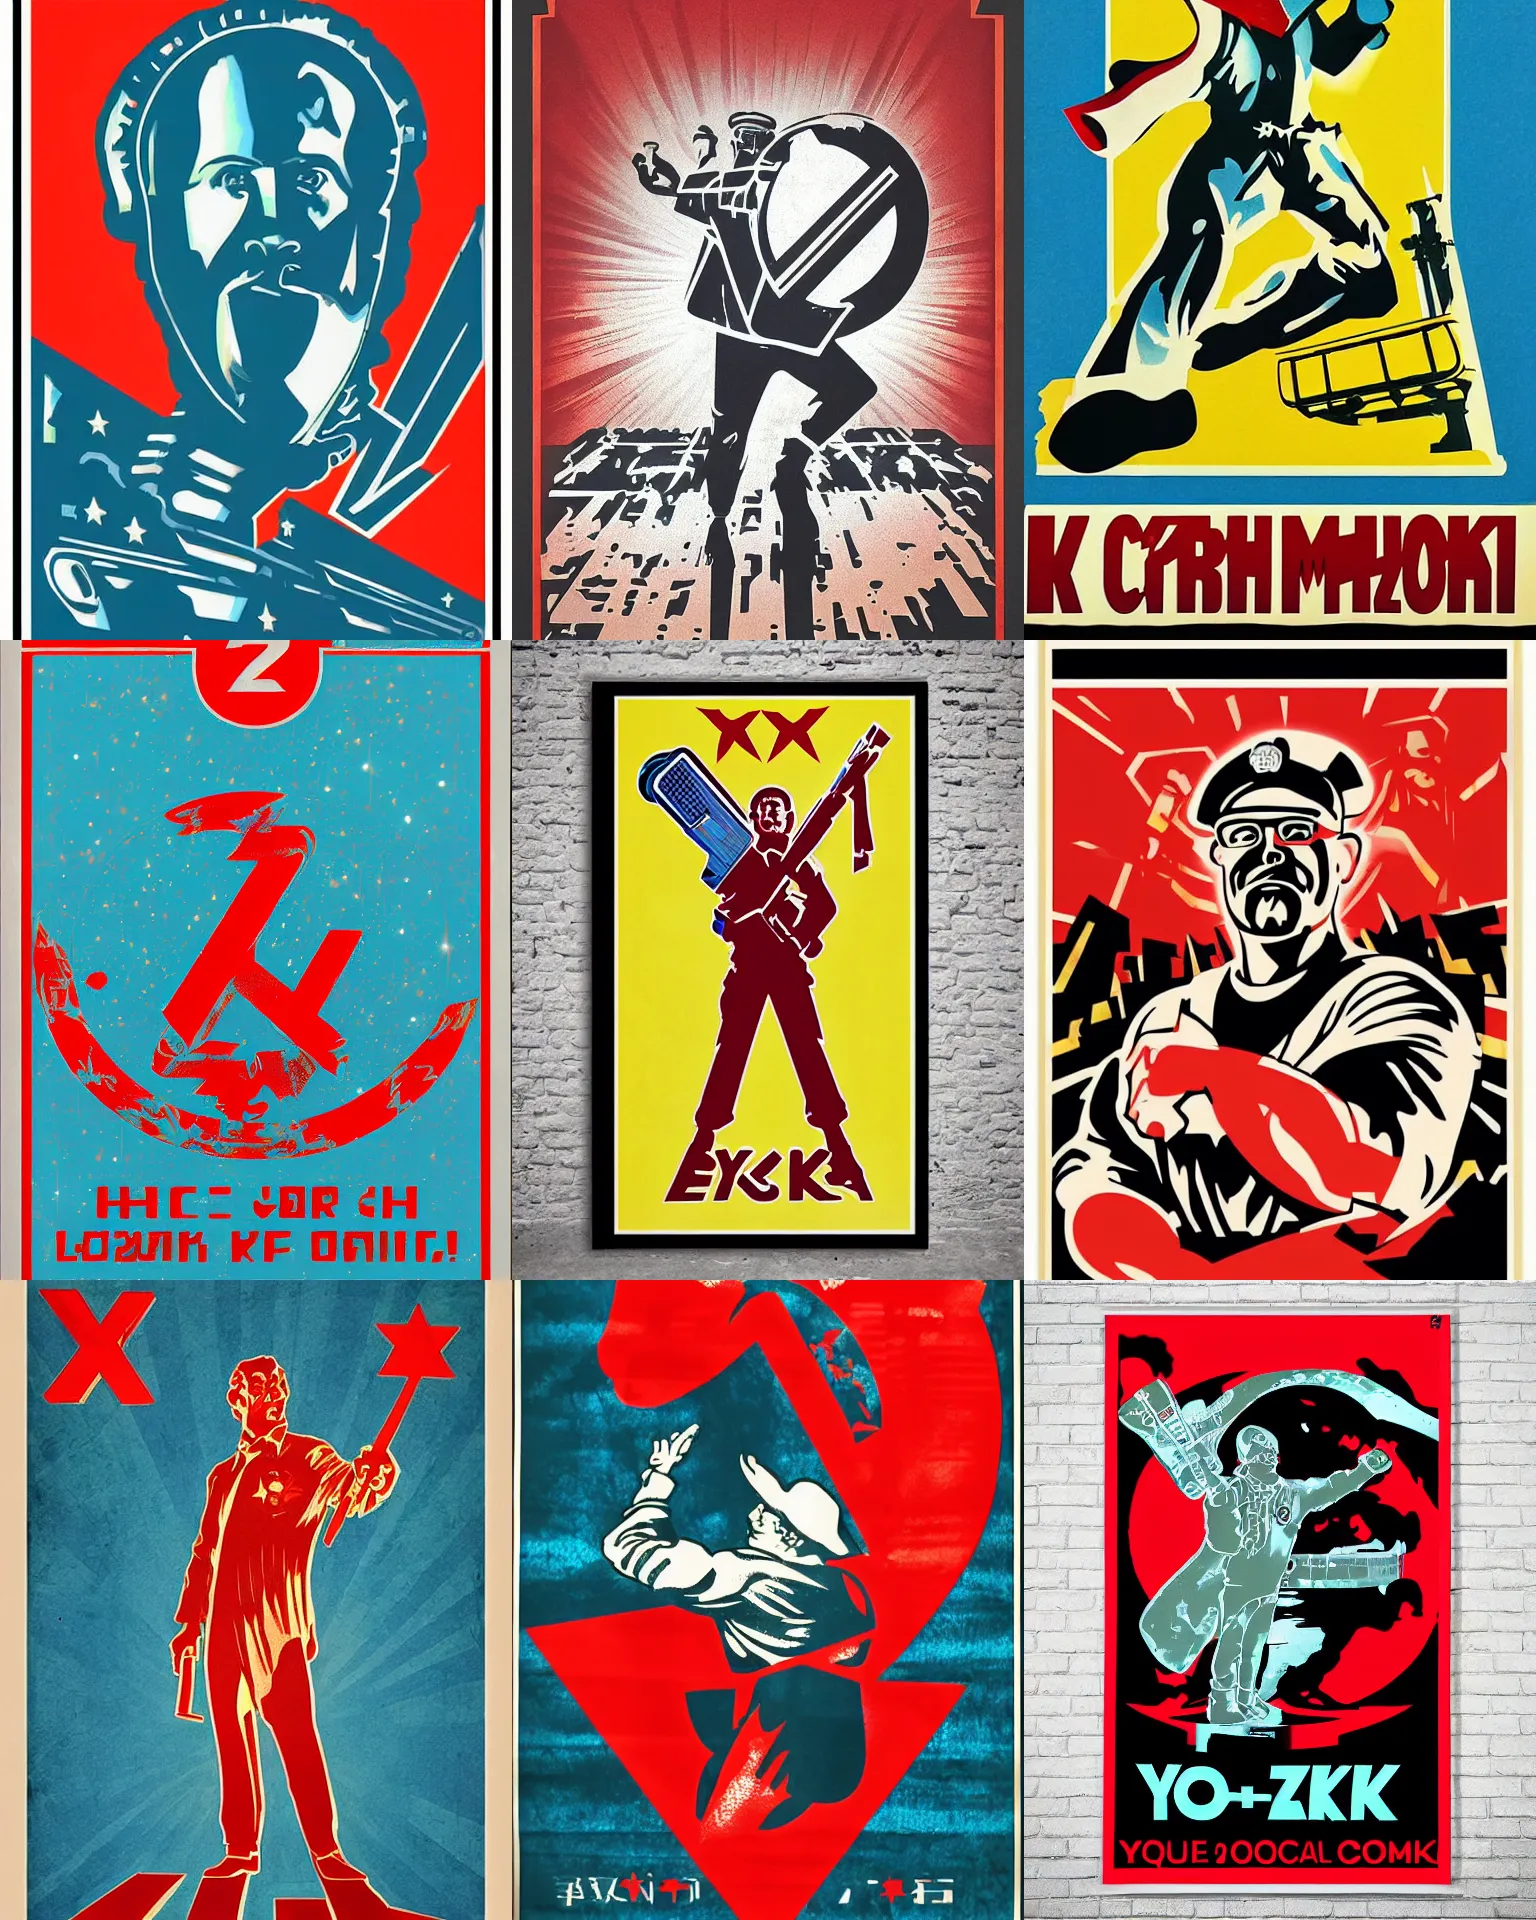 Prompt: y 2 k aesethic communist propaganda poster, holographic, liquid metal